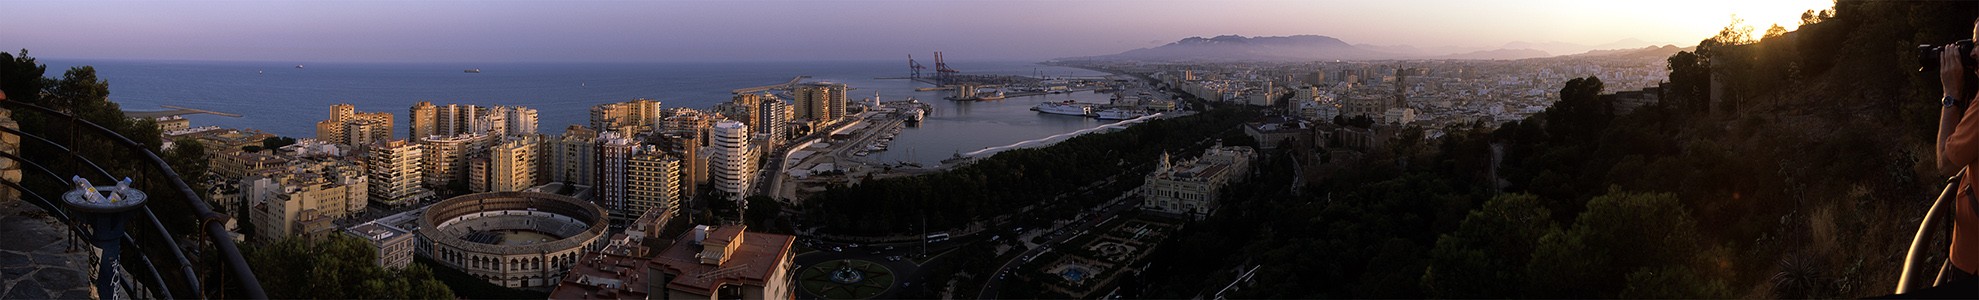 Málaga Blick vom Hügel des Castillo de Gibralfaro: Costa del Sol und das Stadtzentrum